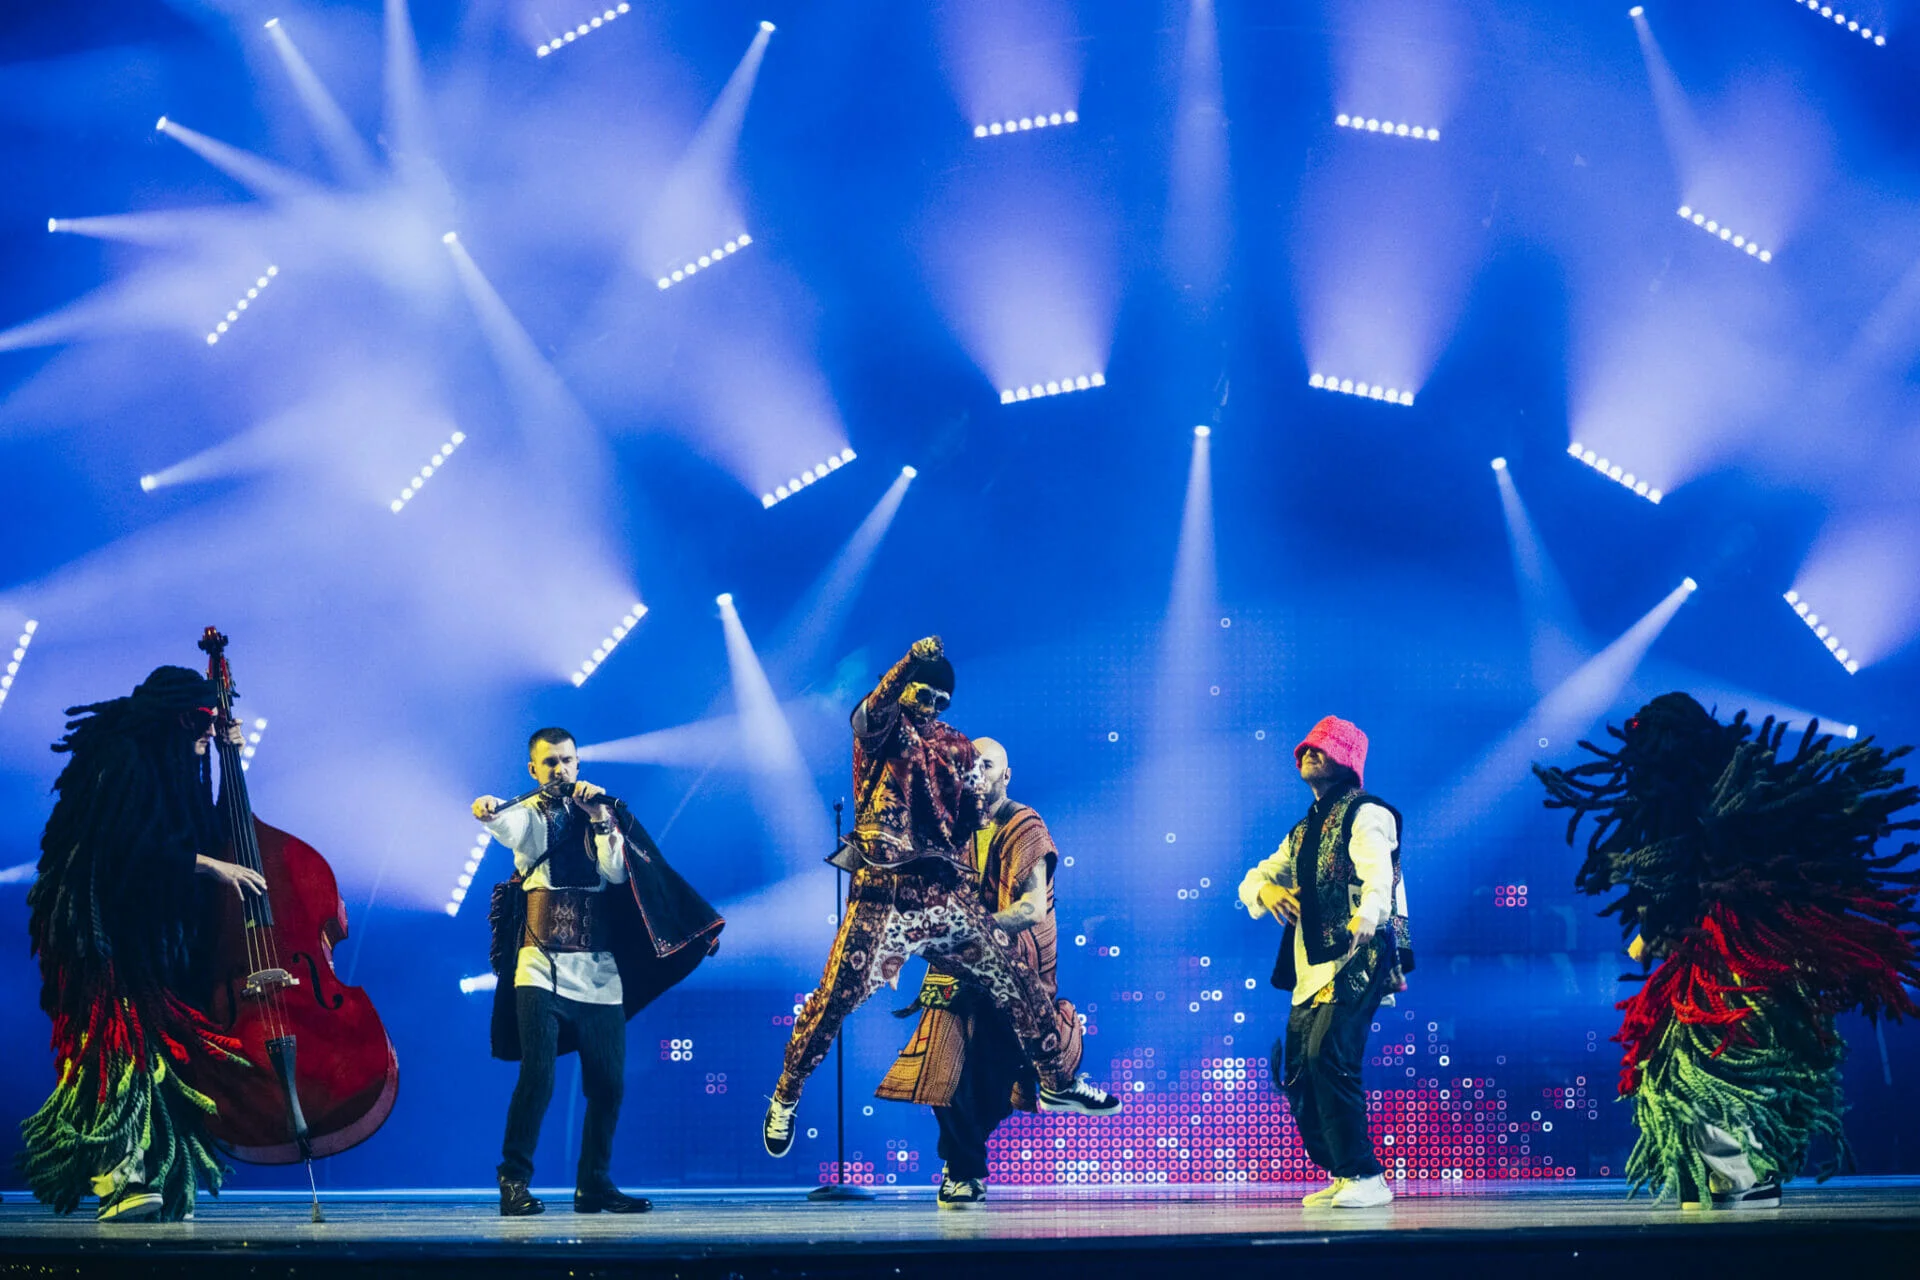 Ukraine's win at Eurovision 2022 | A triumph beyond music